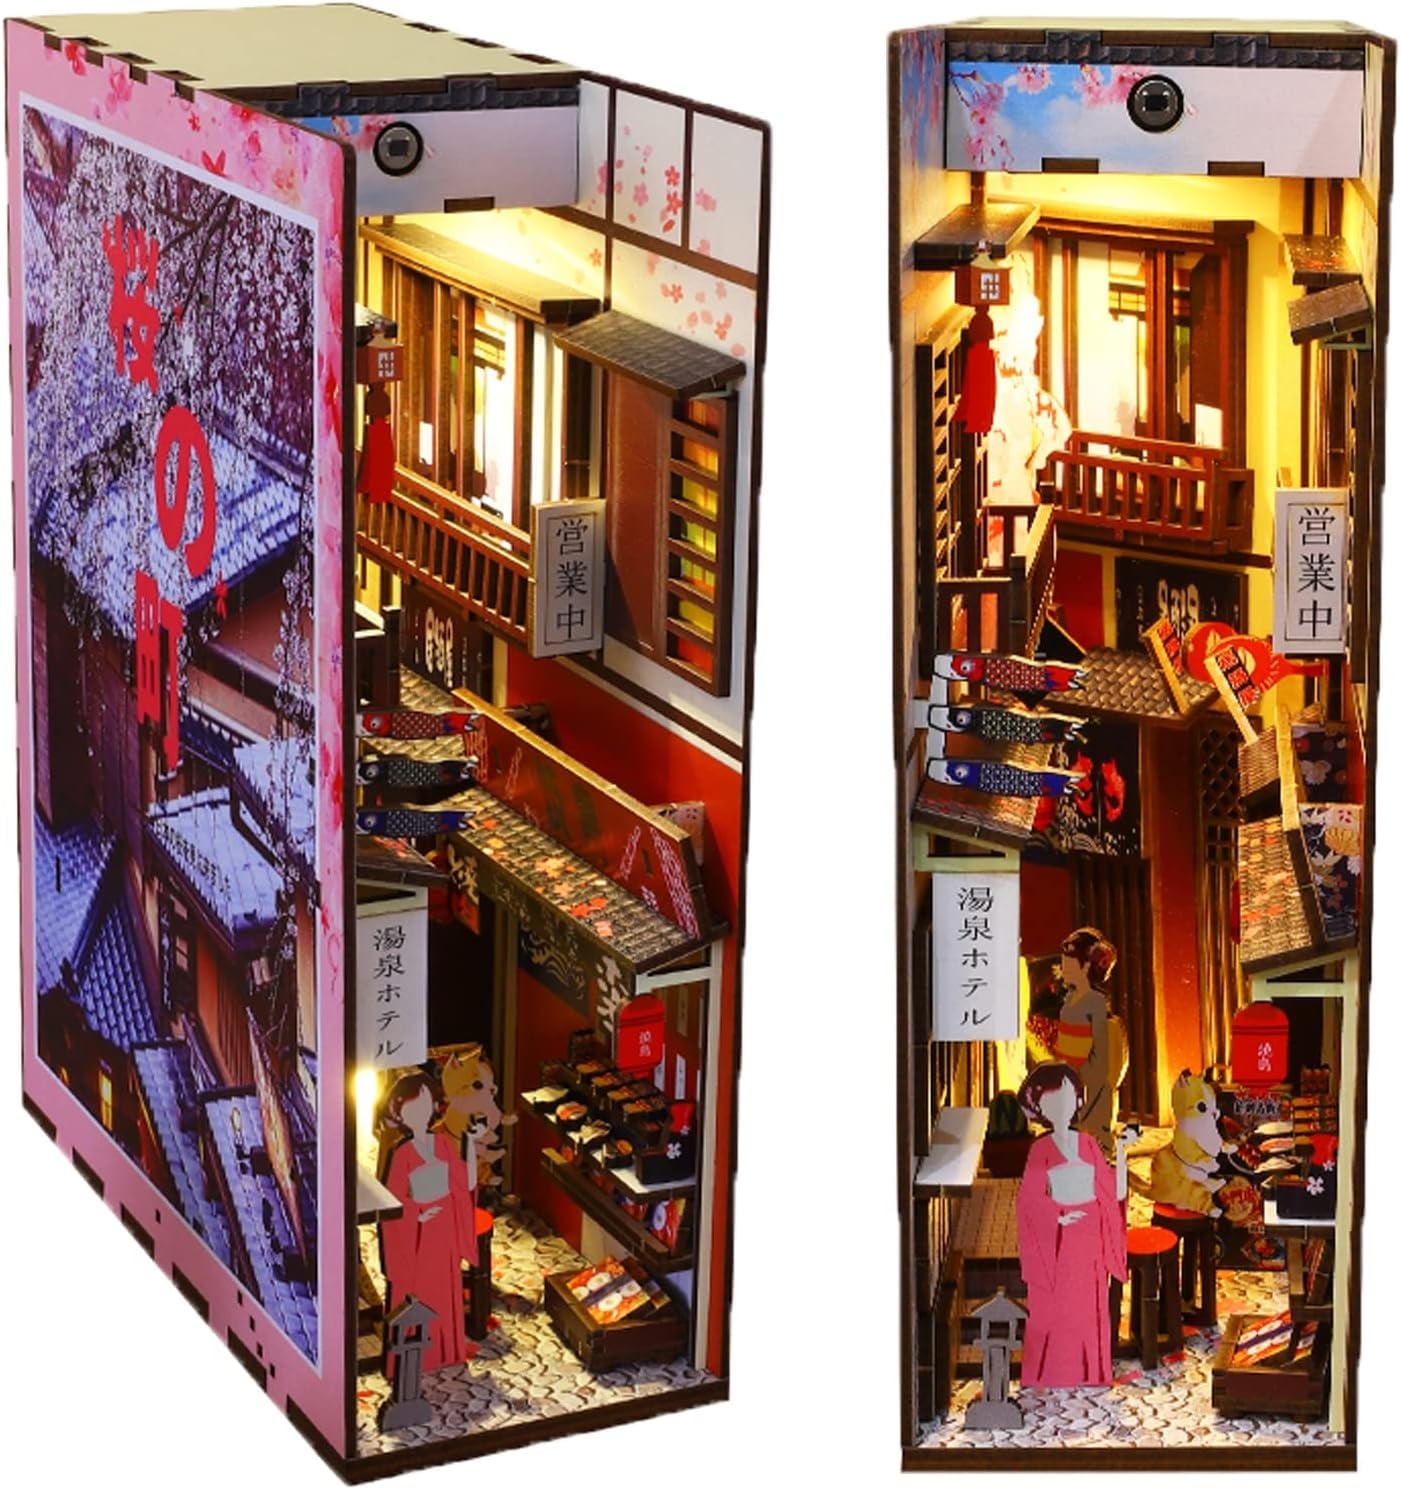 3d Wooden Pue Bookend, diy Book Nook Kit, livre Nook Shelf Insert Decor  Alley Stand Bookshelf For Home Office